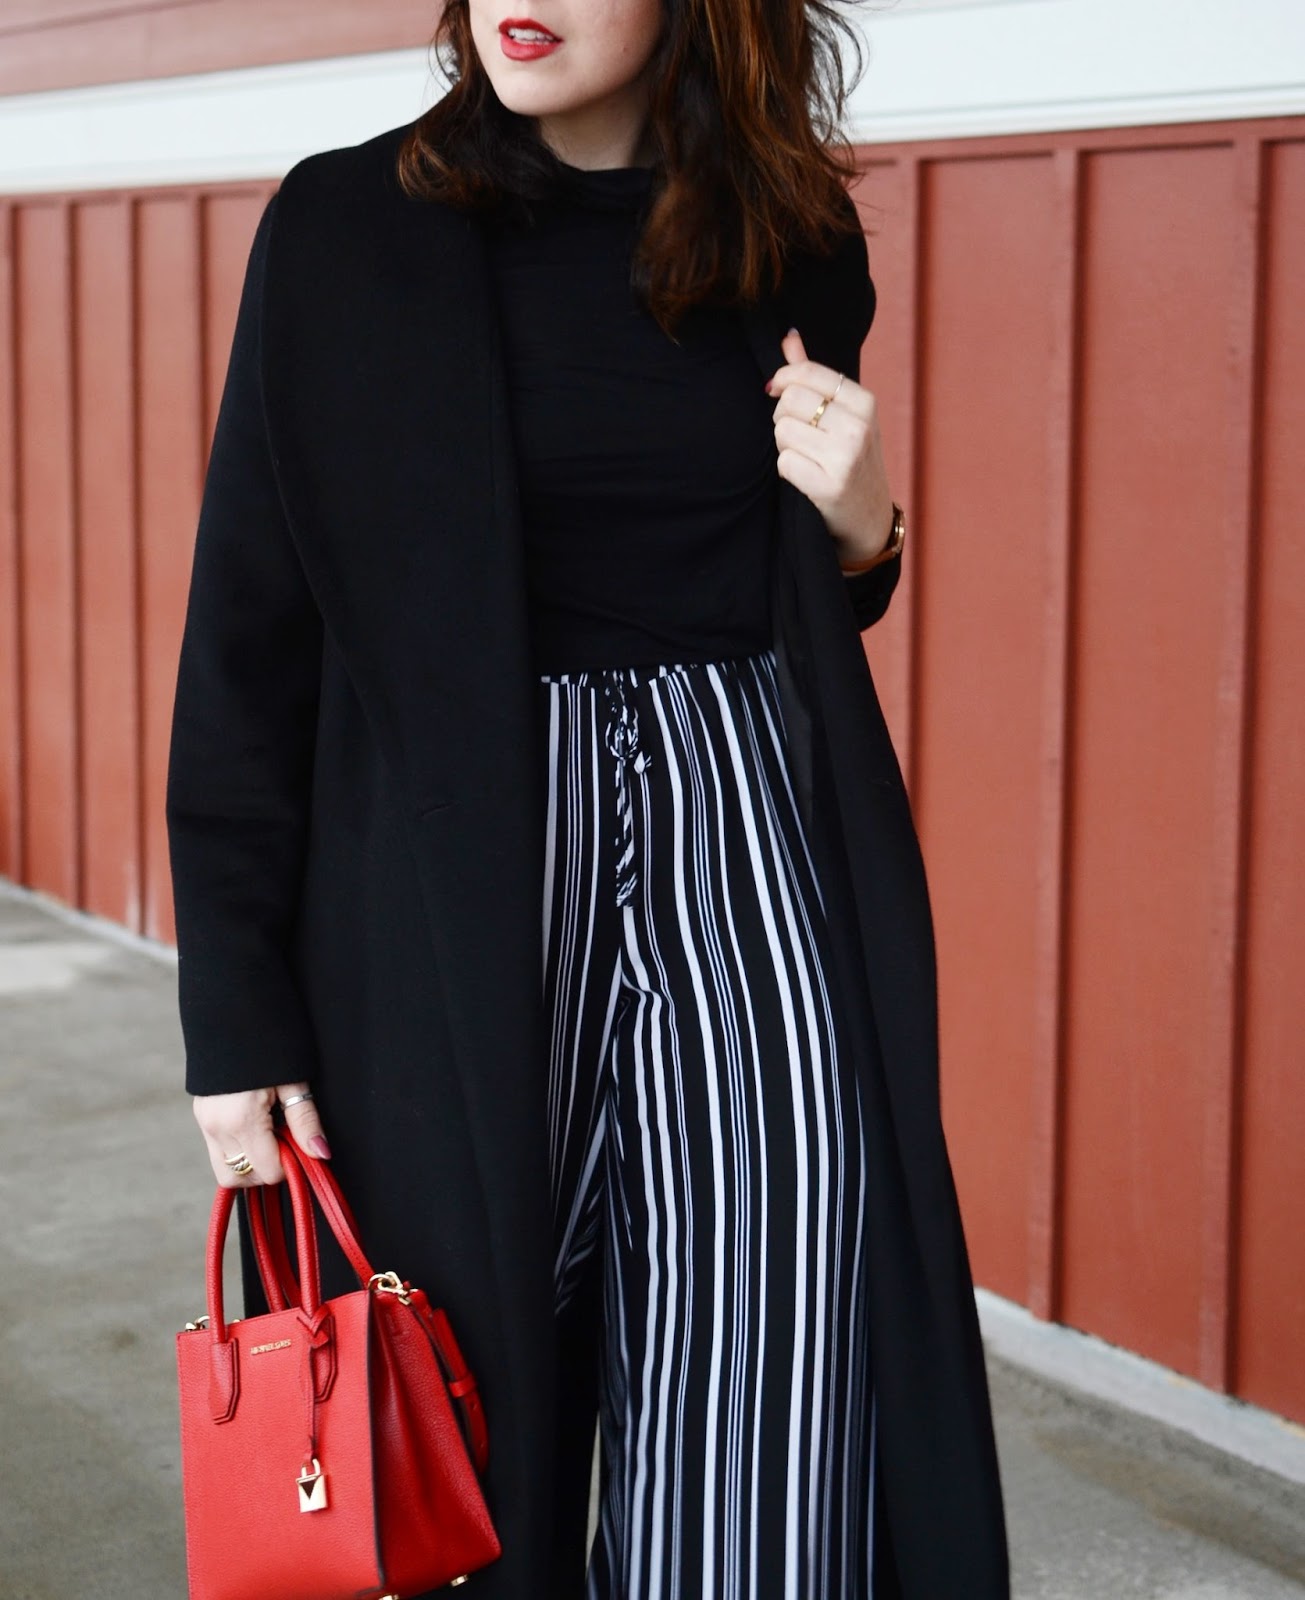 Le Chateau striped pants trousers outfit vancouver fashion blogger aleesha harris